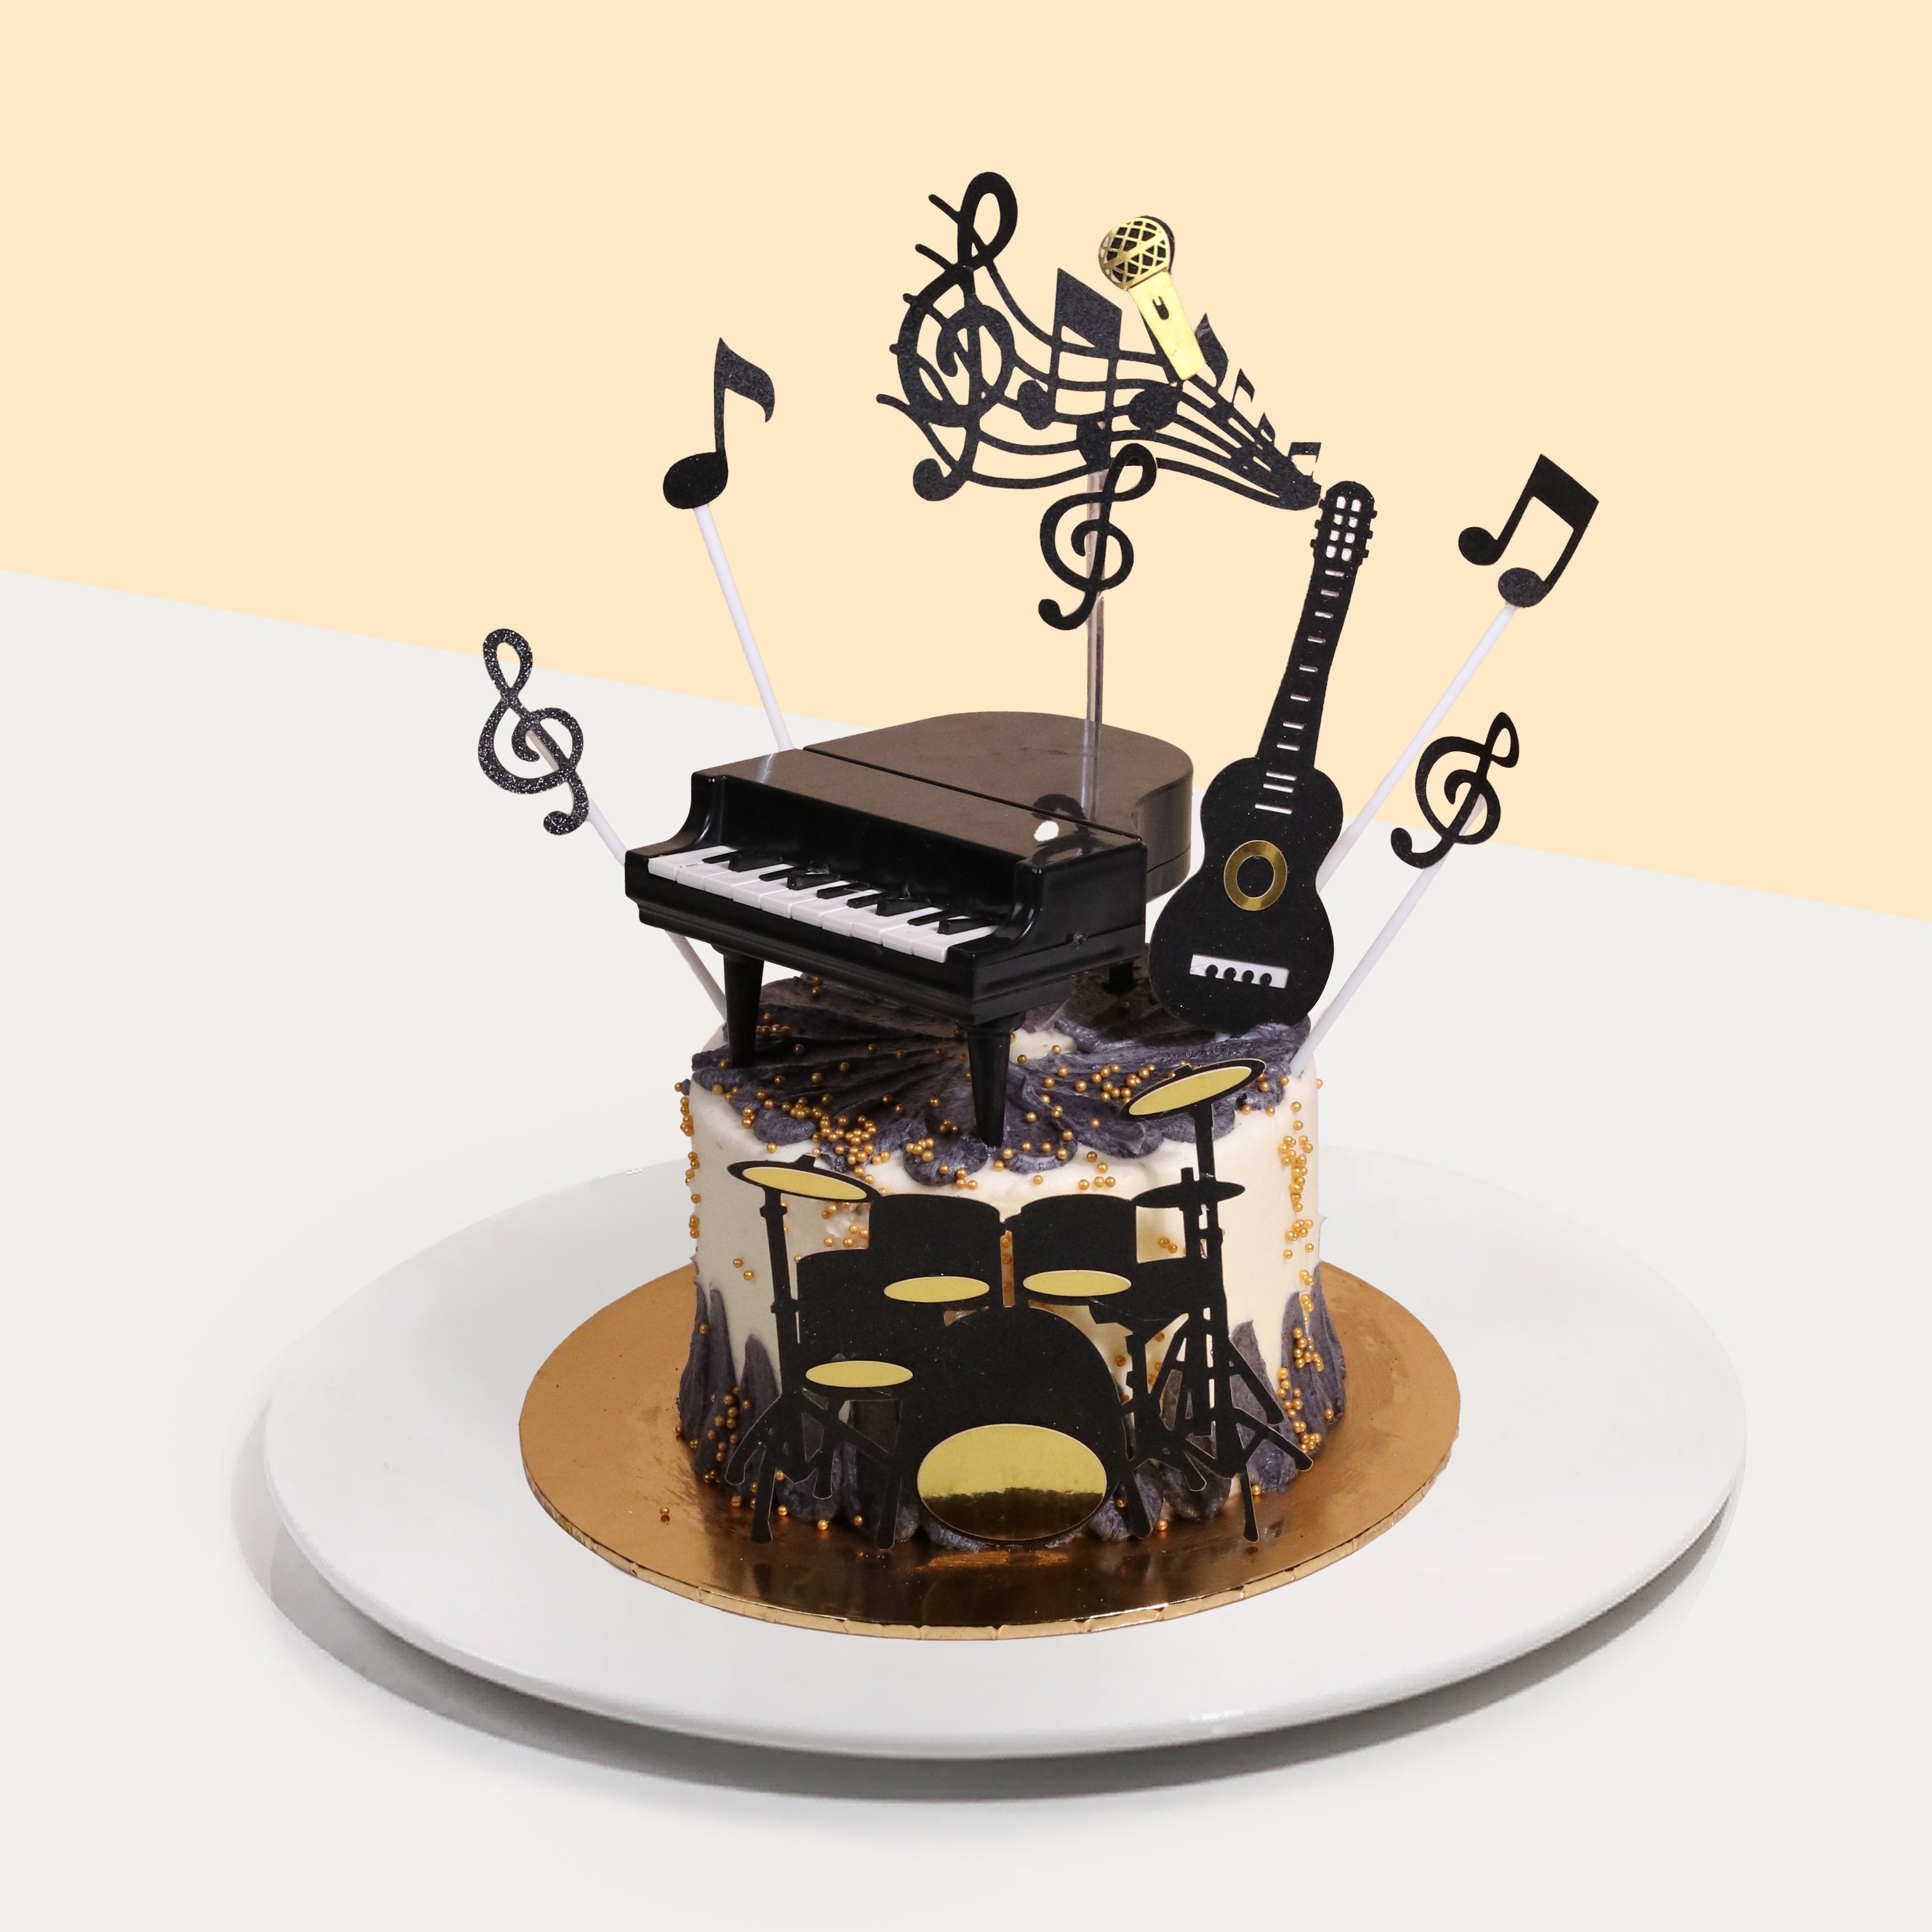 5 Amazing Music Instruments Cake Designs